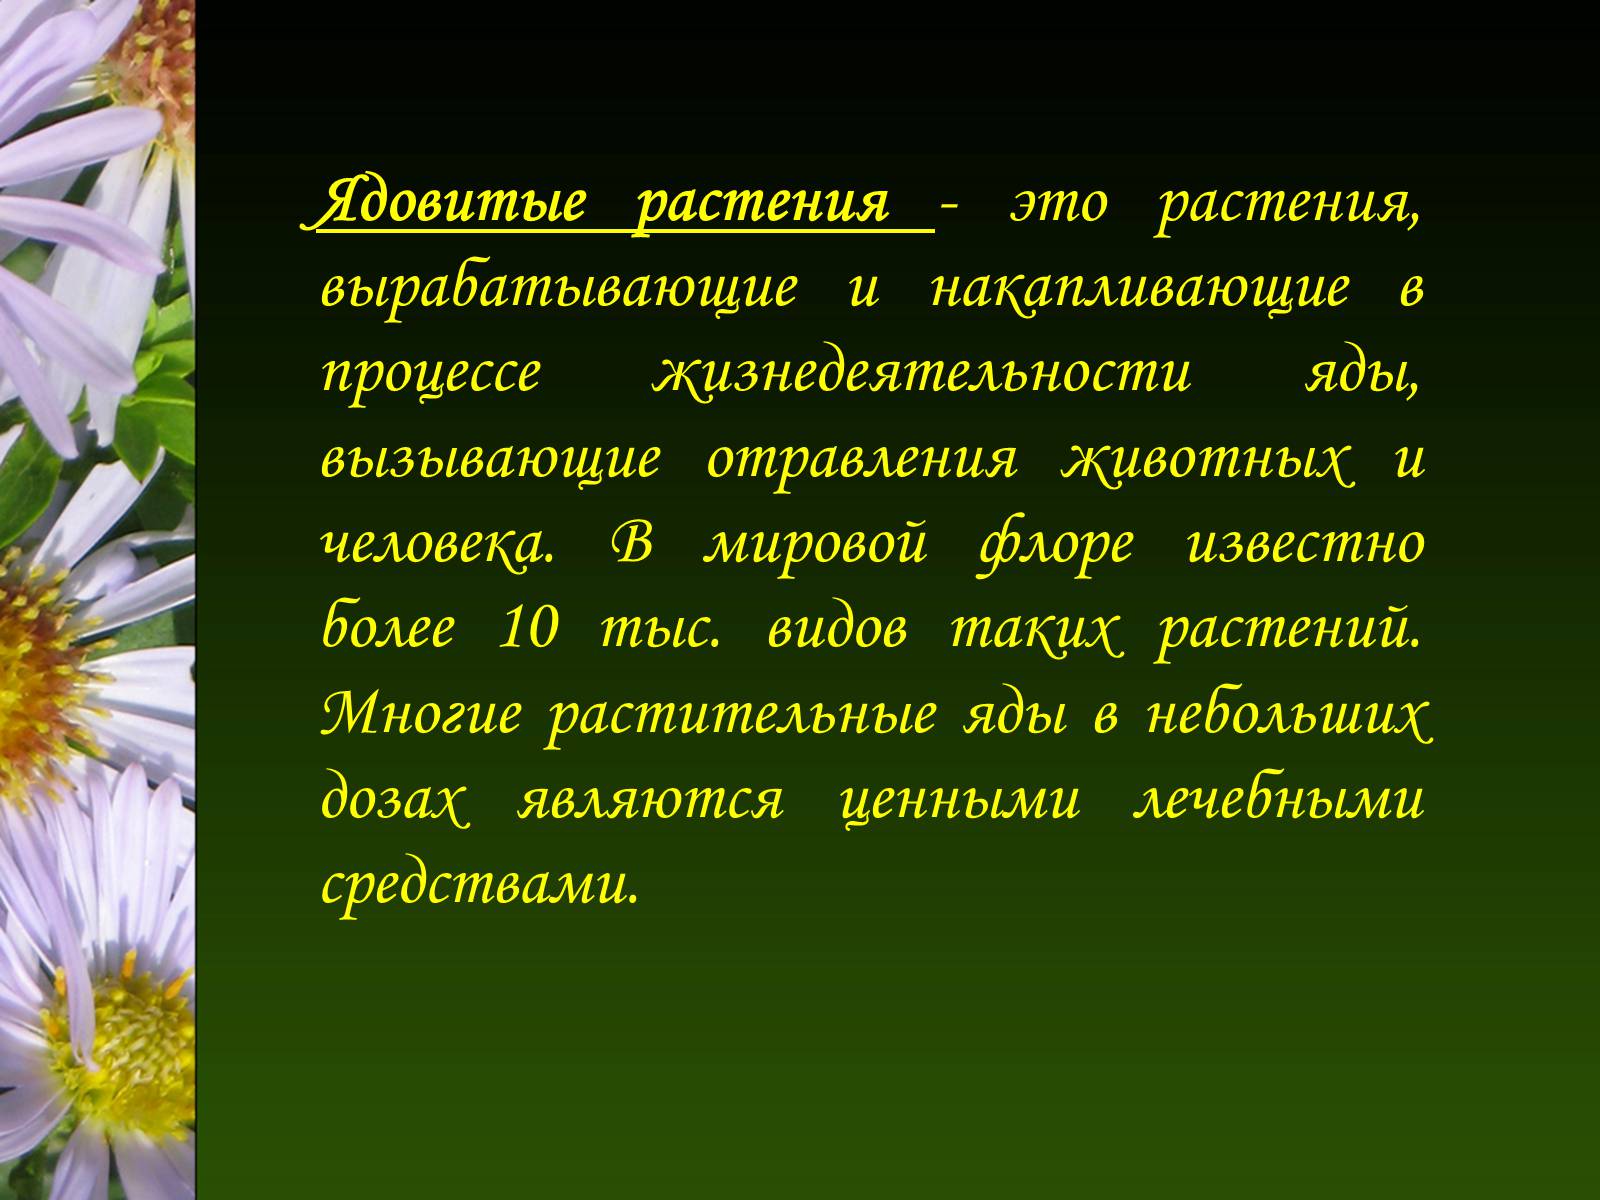 Презентація на тему «Ядовитые растения Украины» - Слайд #2